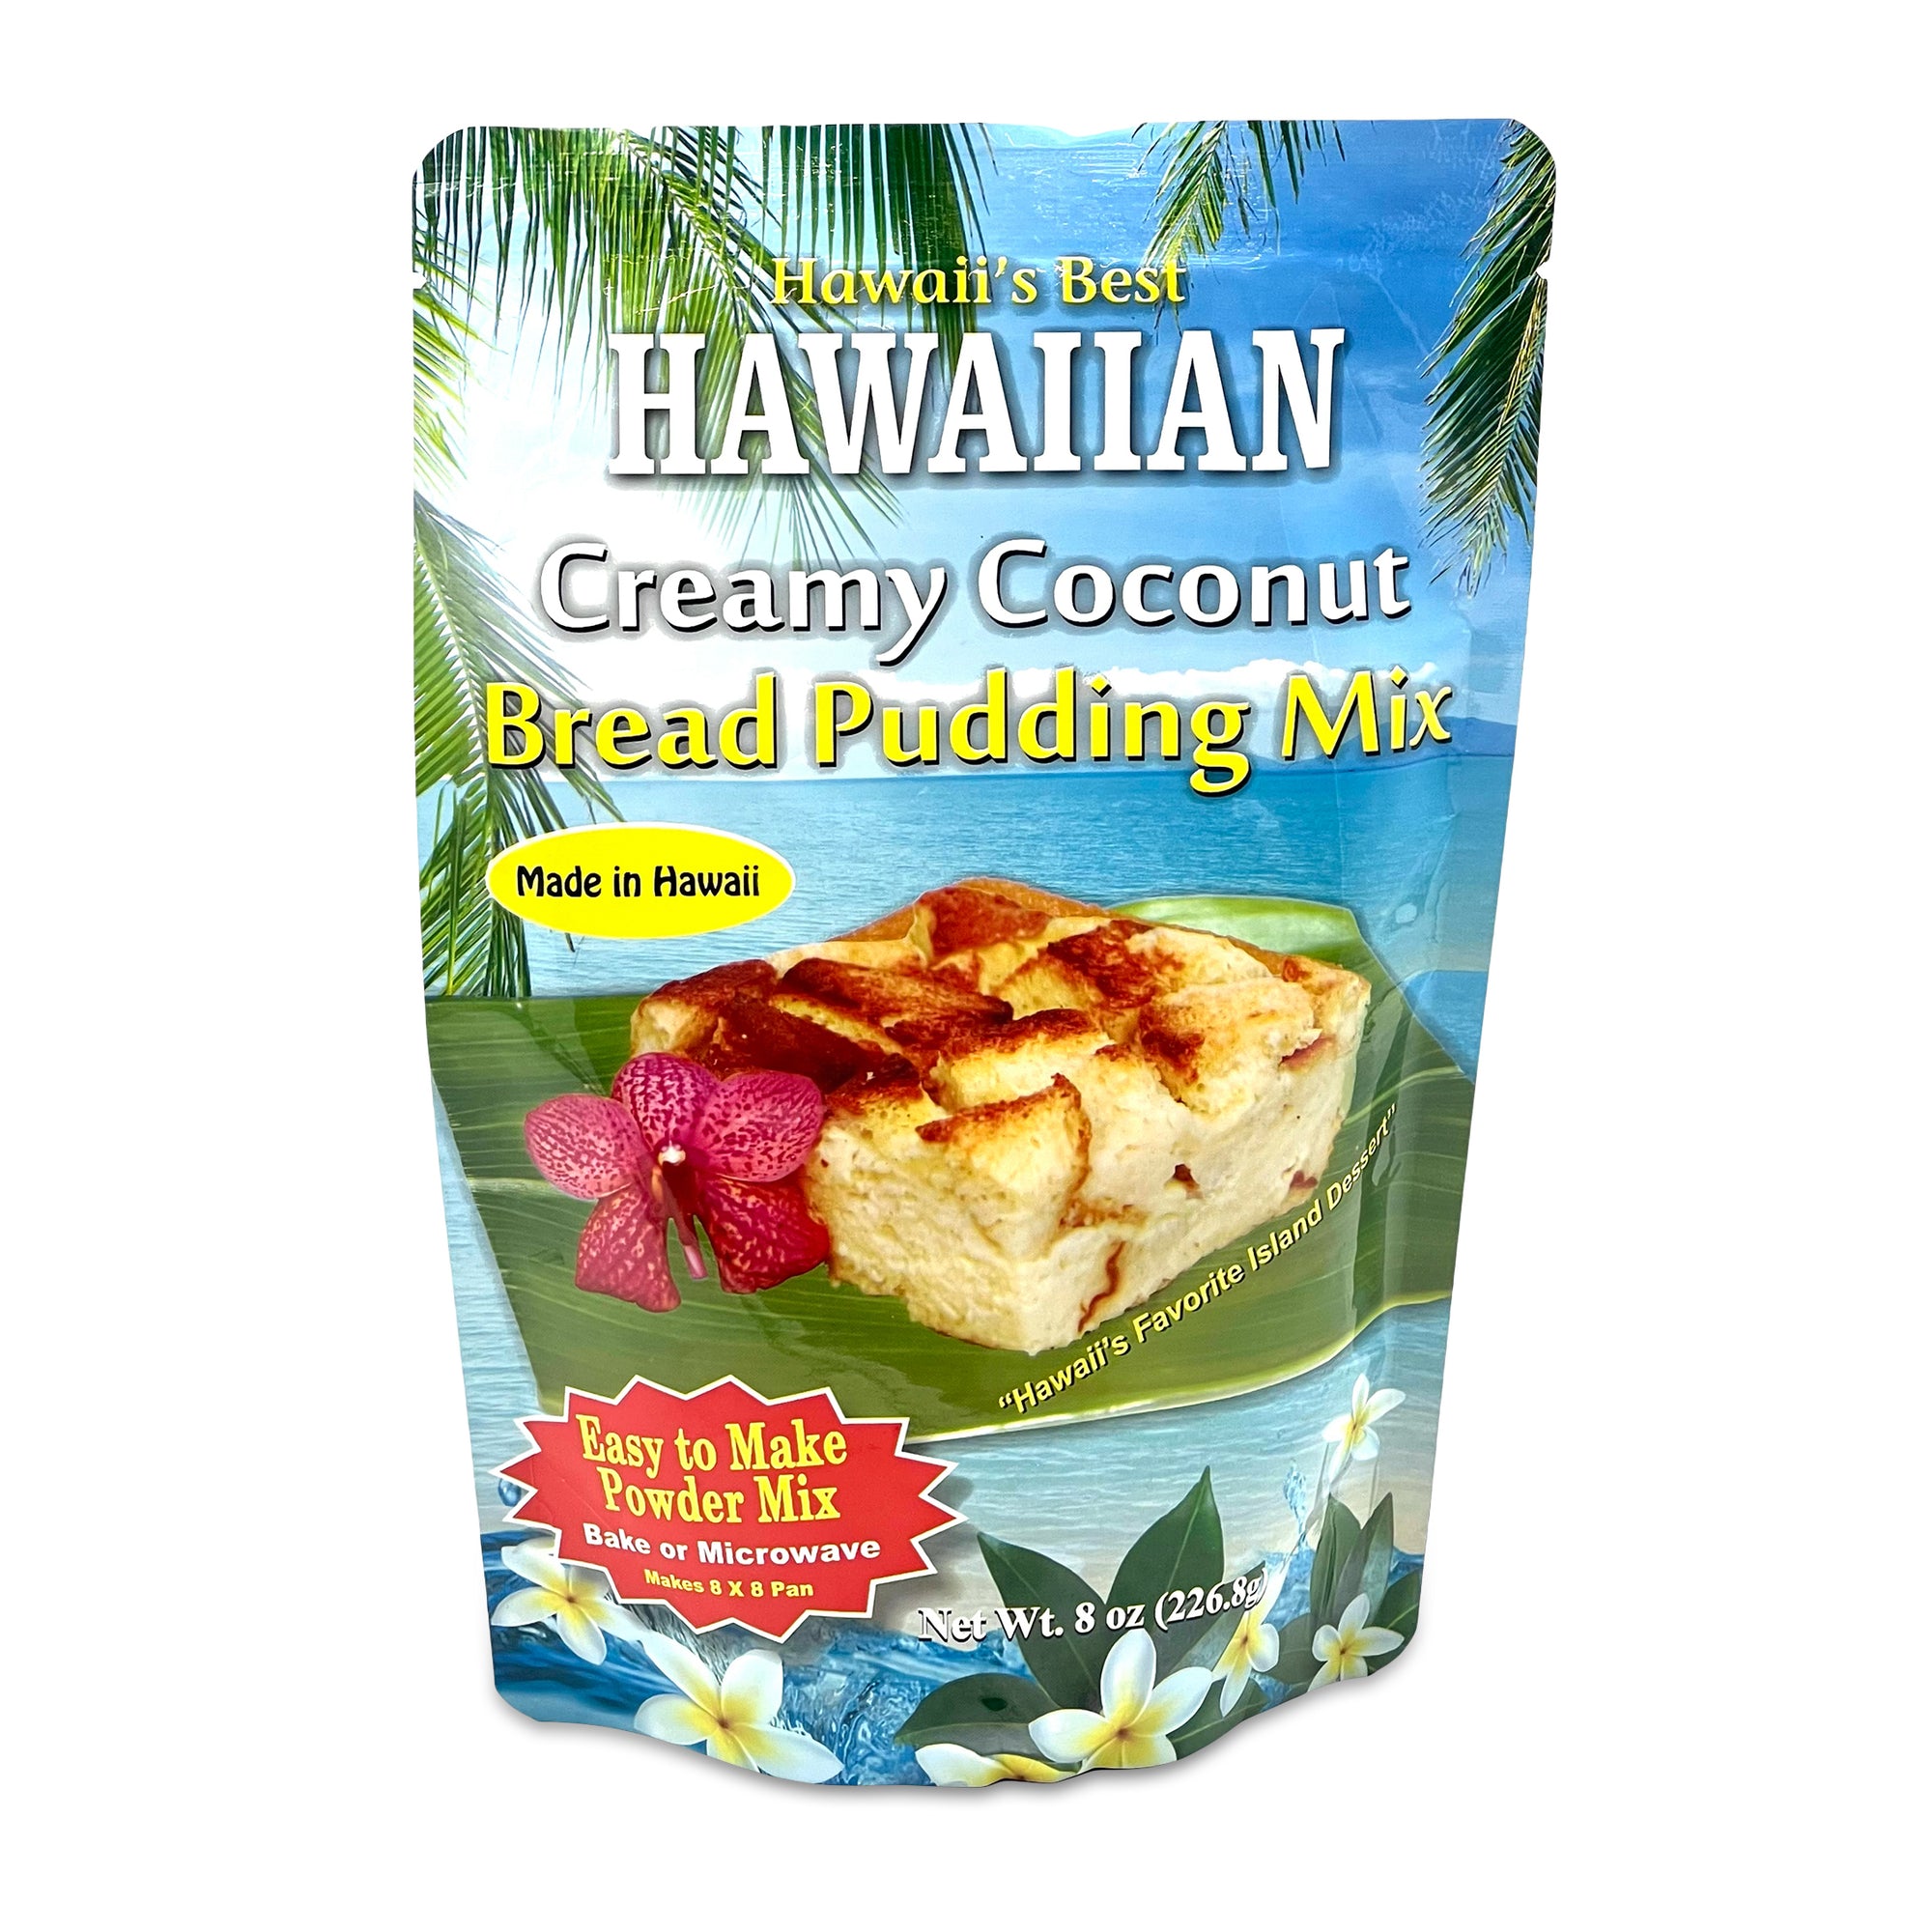 Pop-Up Mākeke - Hawaii's Best Mixes - Hawaiian Creamy Coconut Bread Pudding Mix - Front View